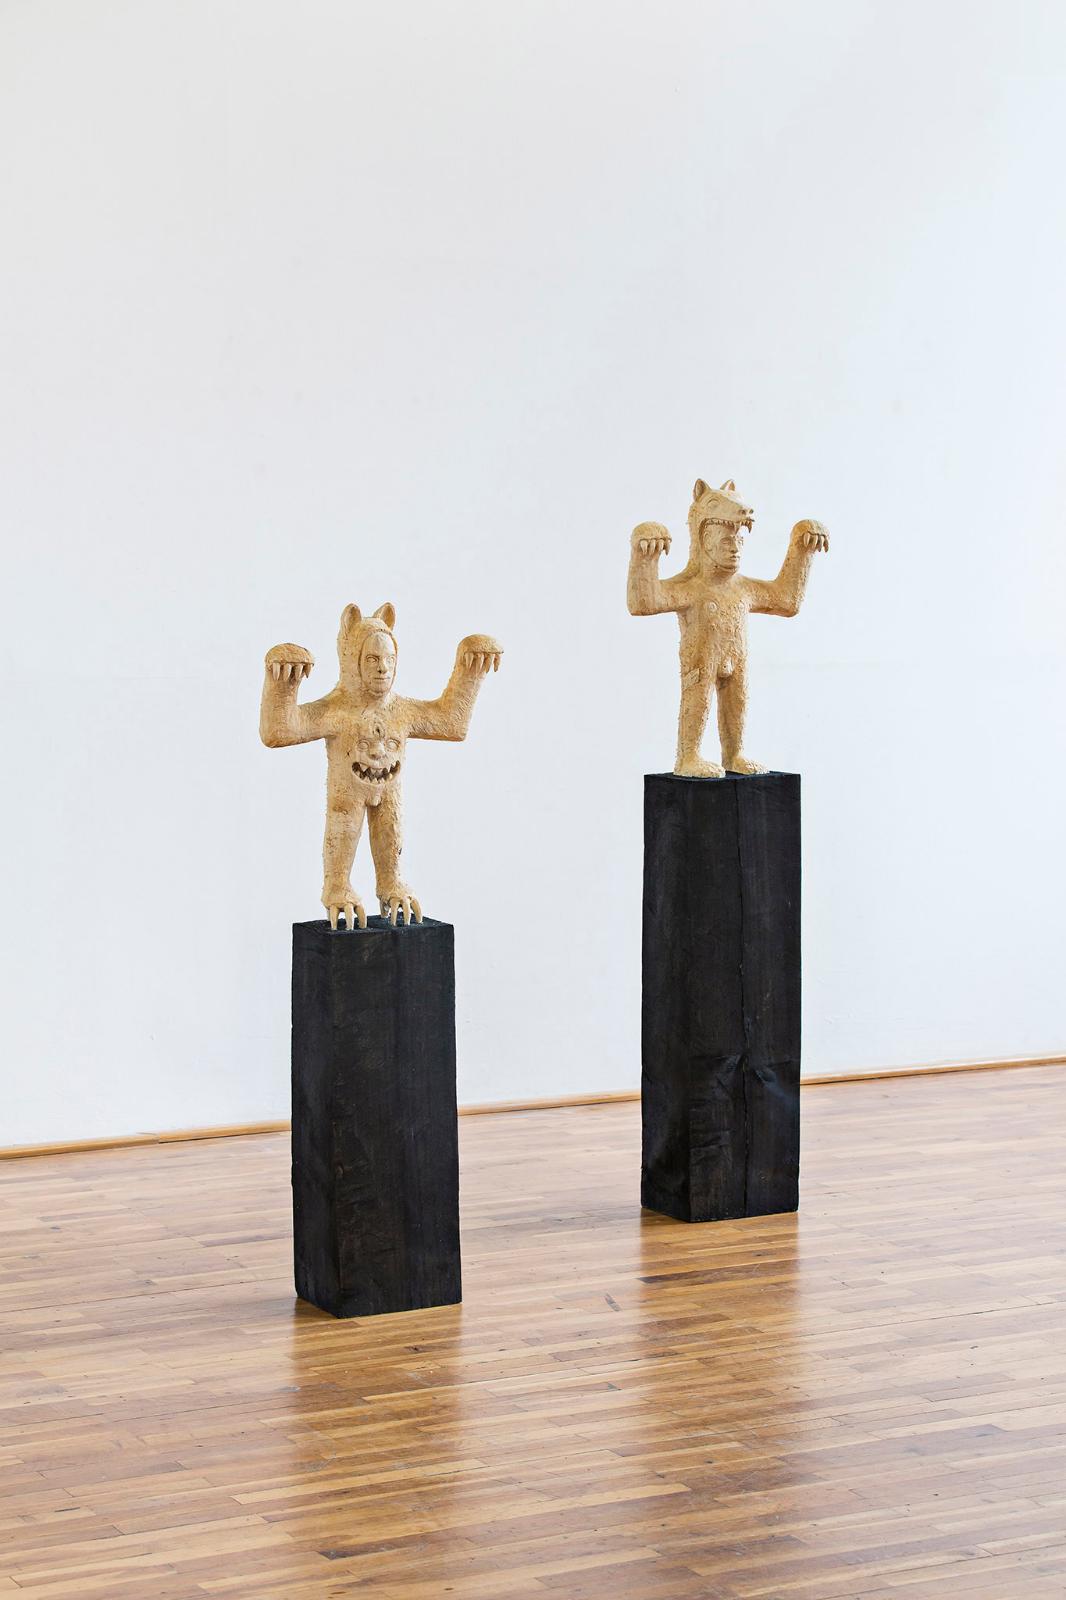 Jan Thomas, Buddy I (linke Skulptur), 2015, Pappelholz, Beize, Höhe: 128 cm, Preis auf Anfrage, thj006kü